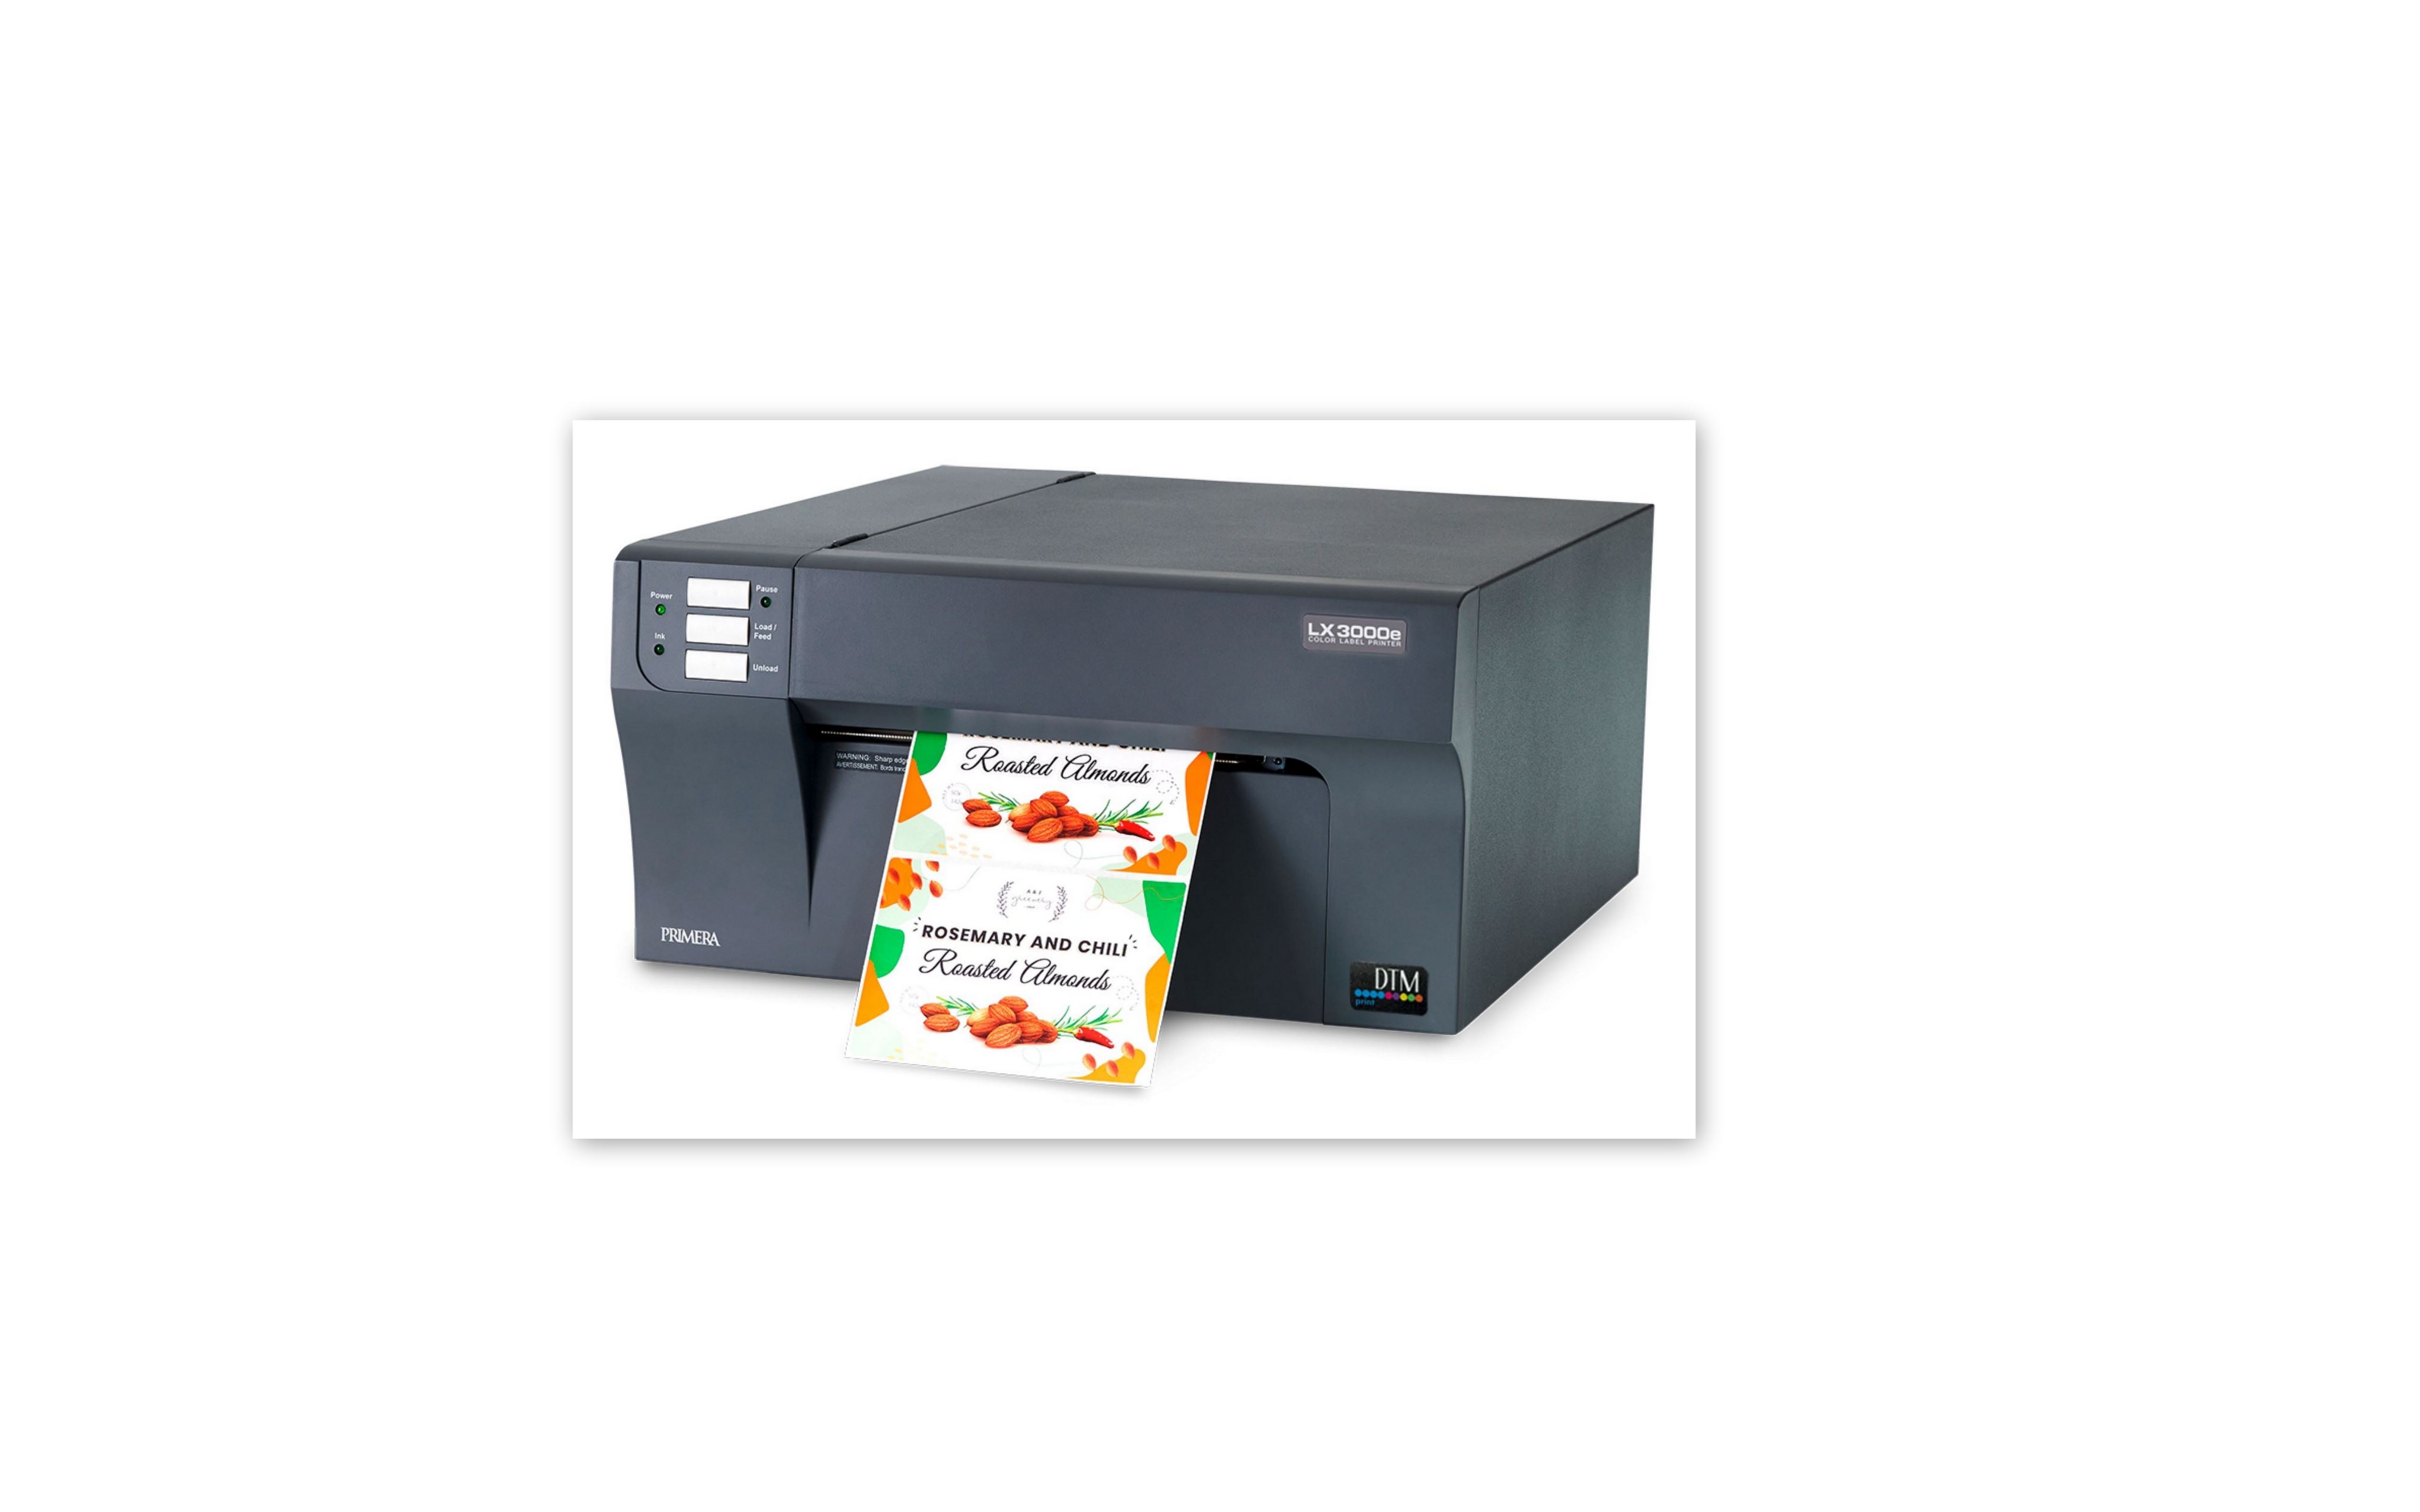 DTM PRINT LX3000e Color mit drei Printer Inkjet Label Label Printer Pigment separaten Tintentanks(CMY) Pigment-basierte Vollfarb-Drucktechnologie WLAN Netzwerkfähig